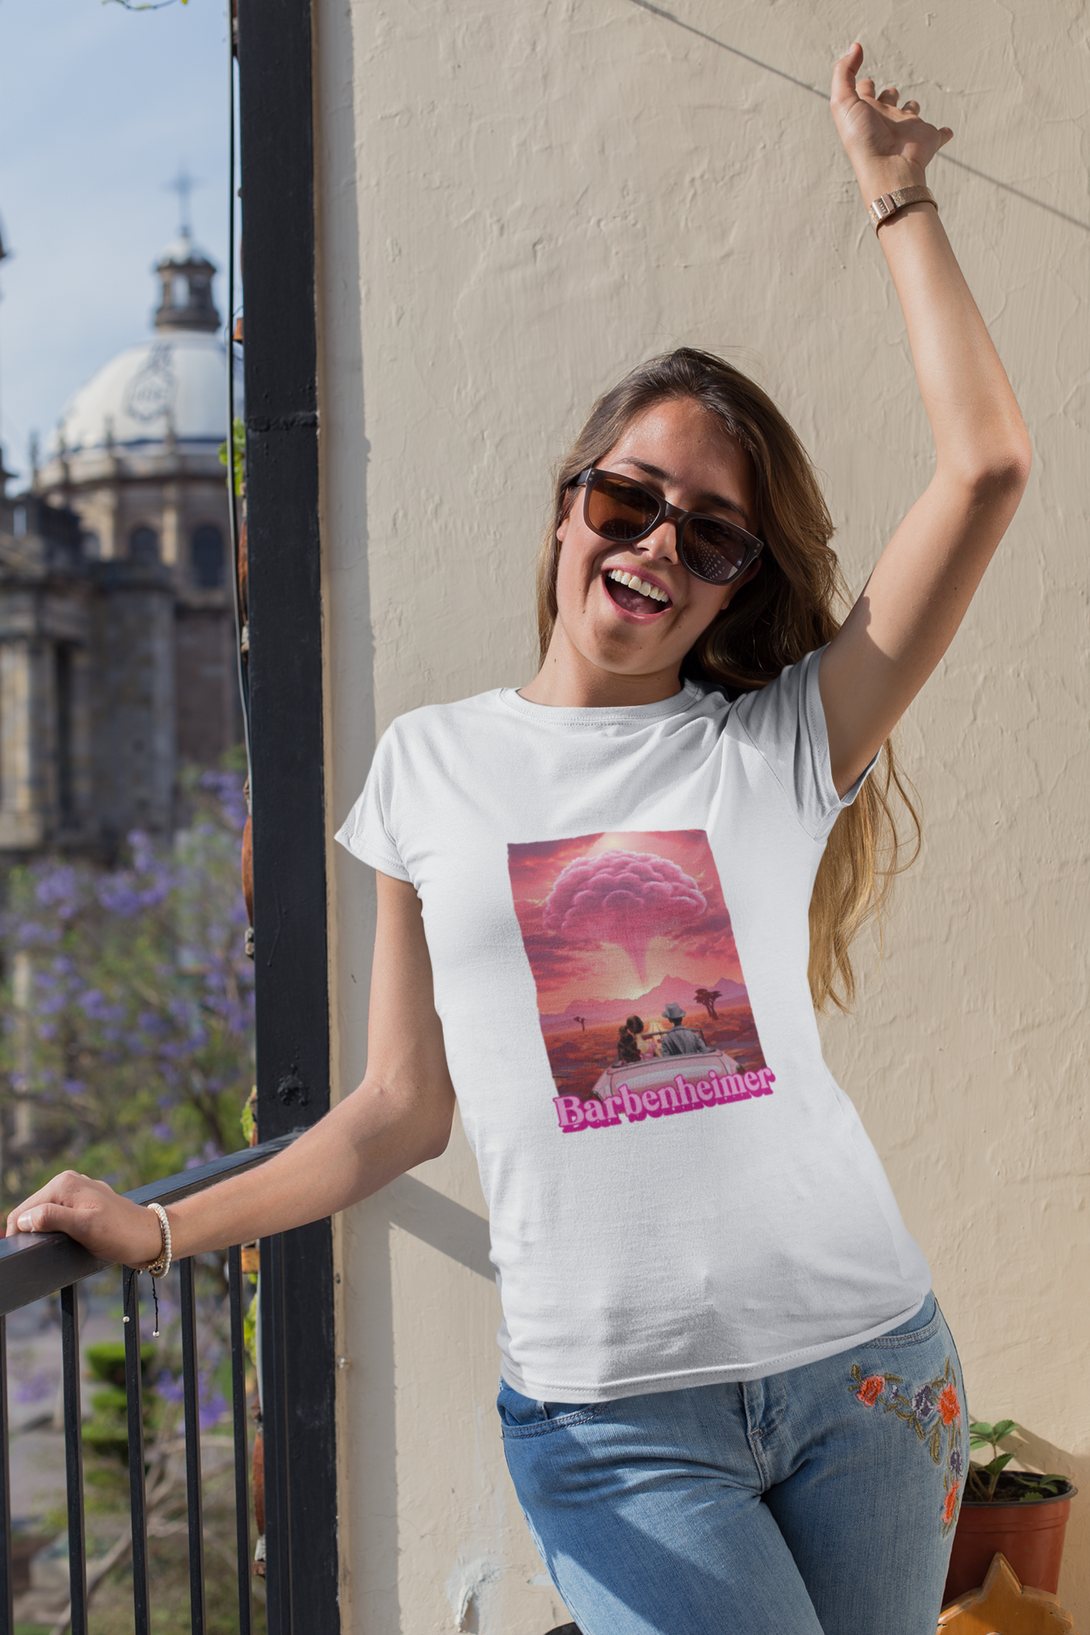 Barbienheimer Printed T-Shirt For Women - WowWaves - 2